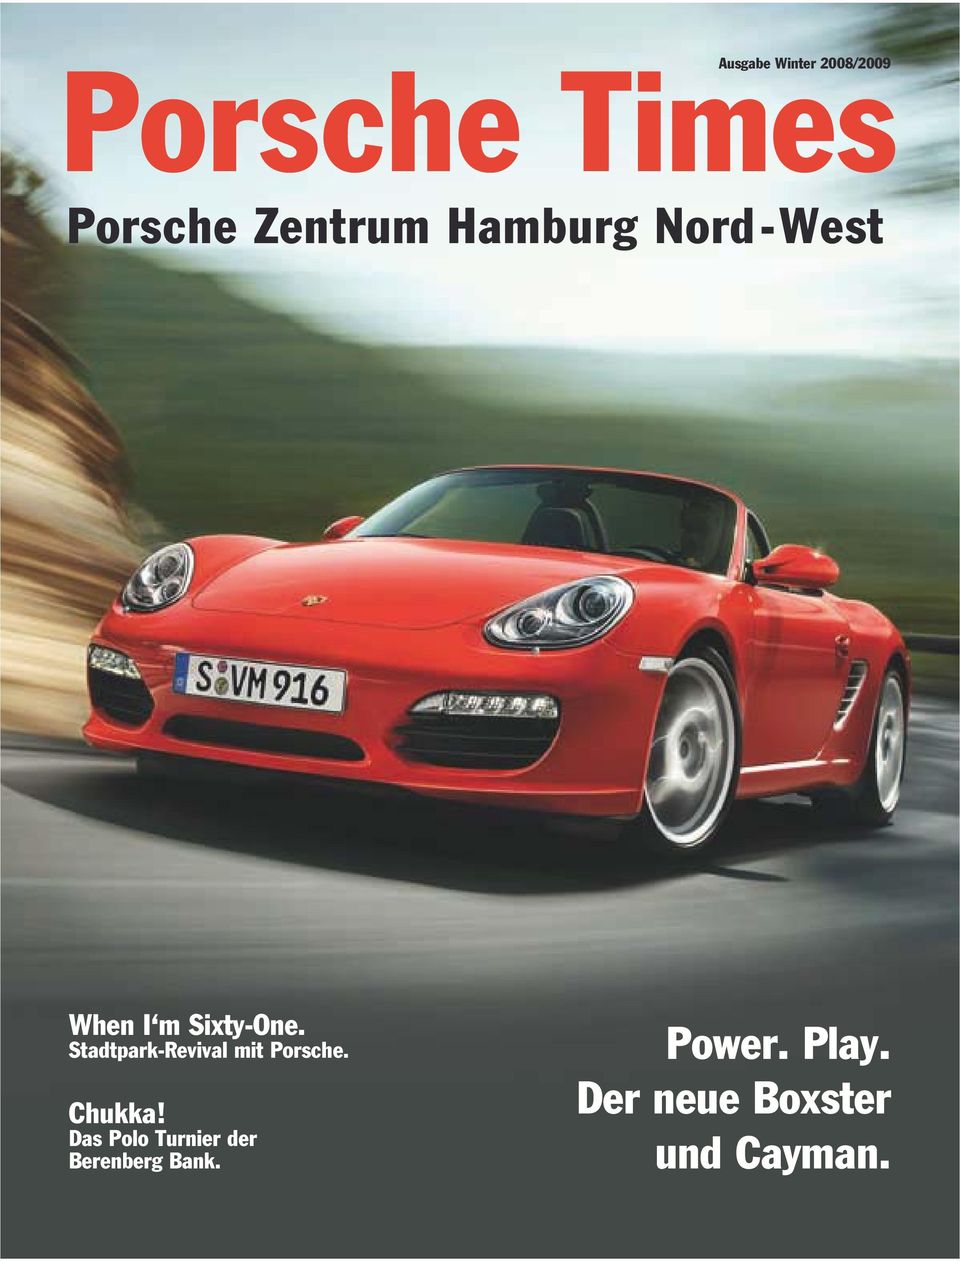 Stadtpark-Revival mit Porsche. Chukka!